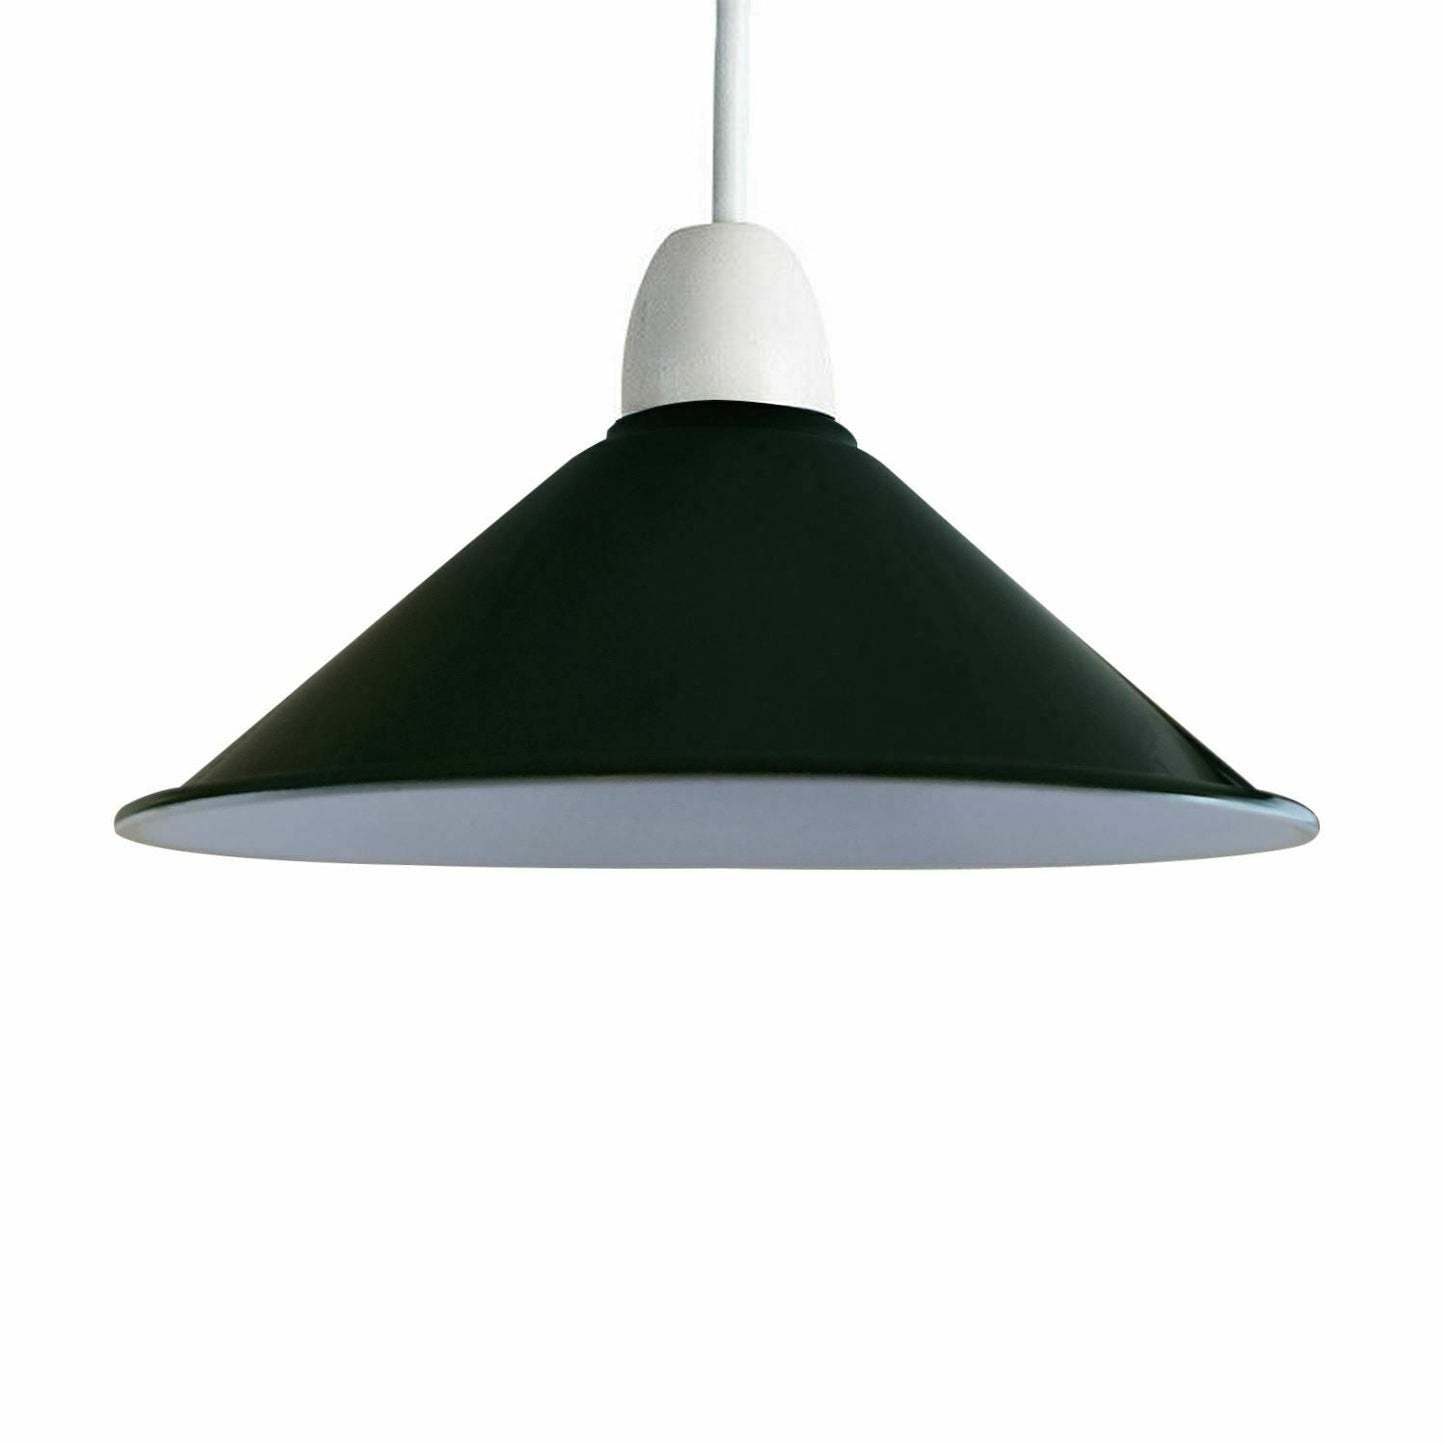 cone metal lamp shade - Application image